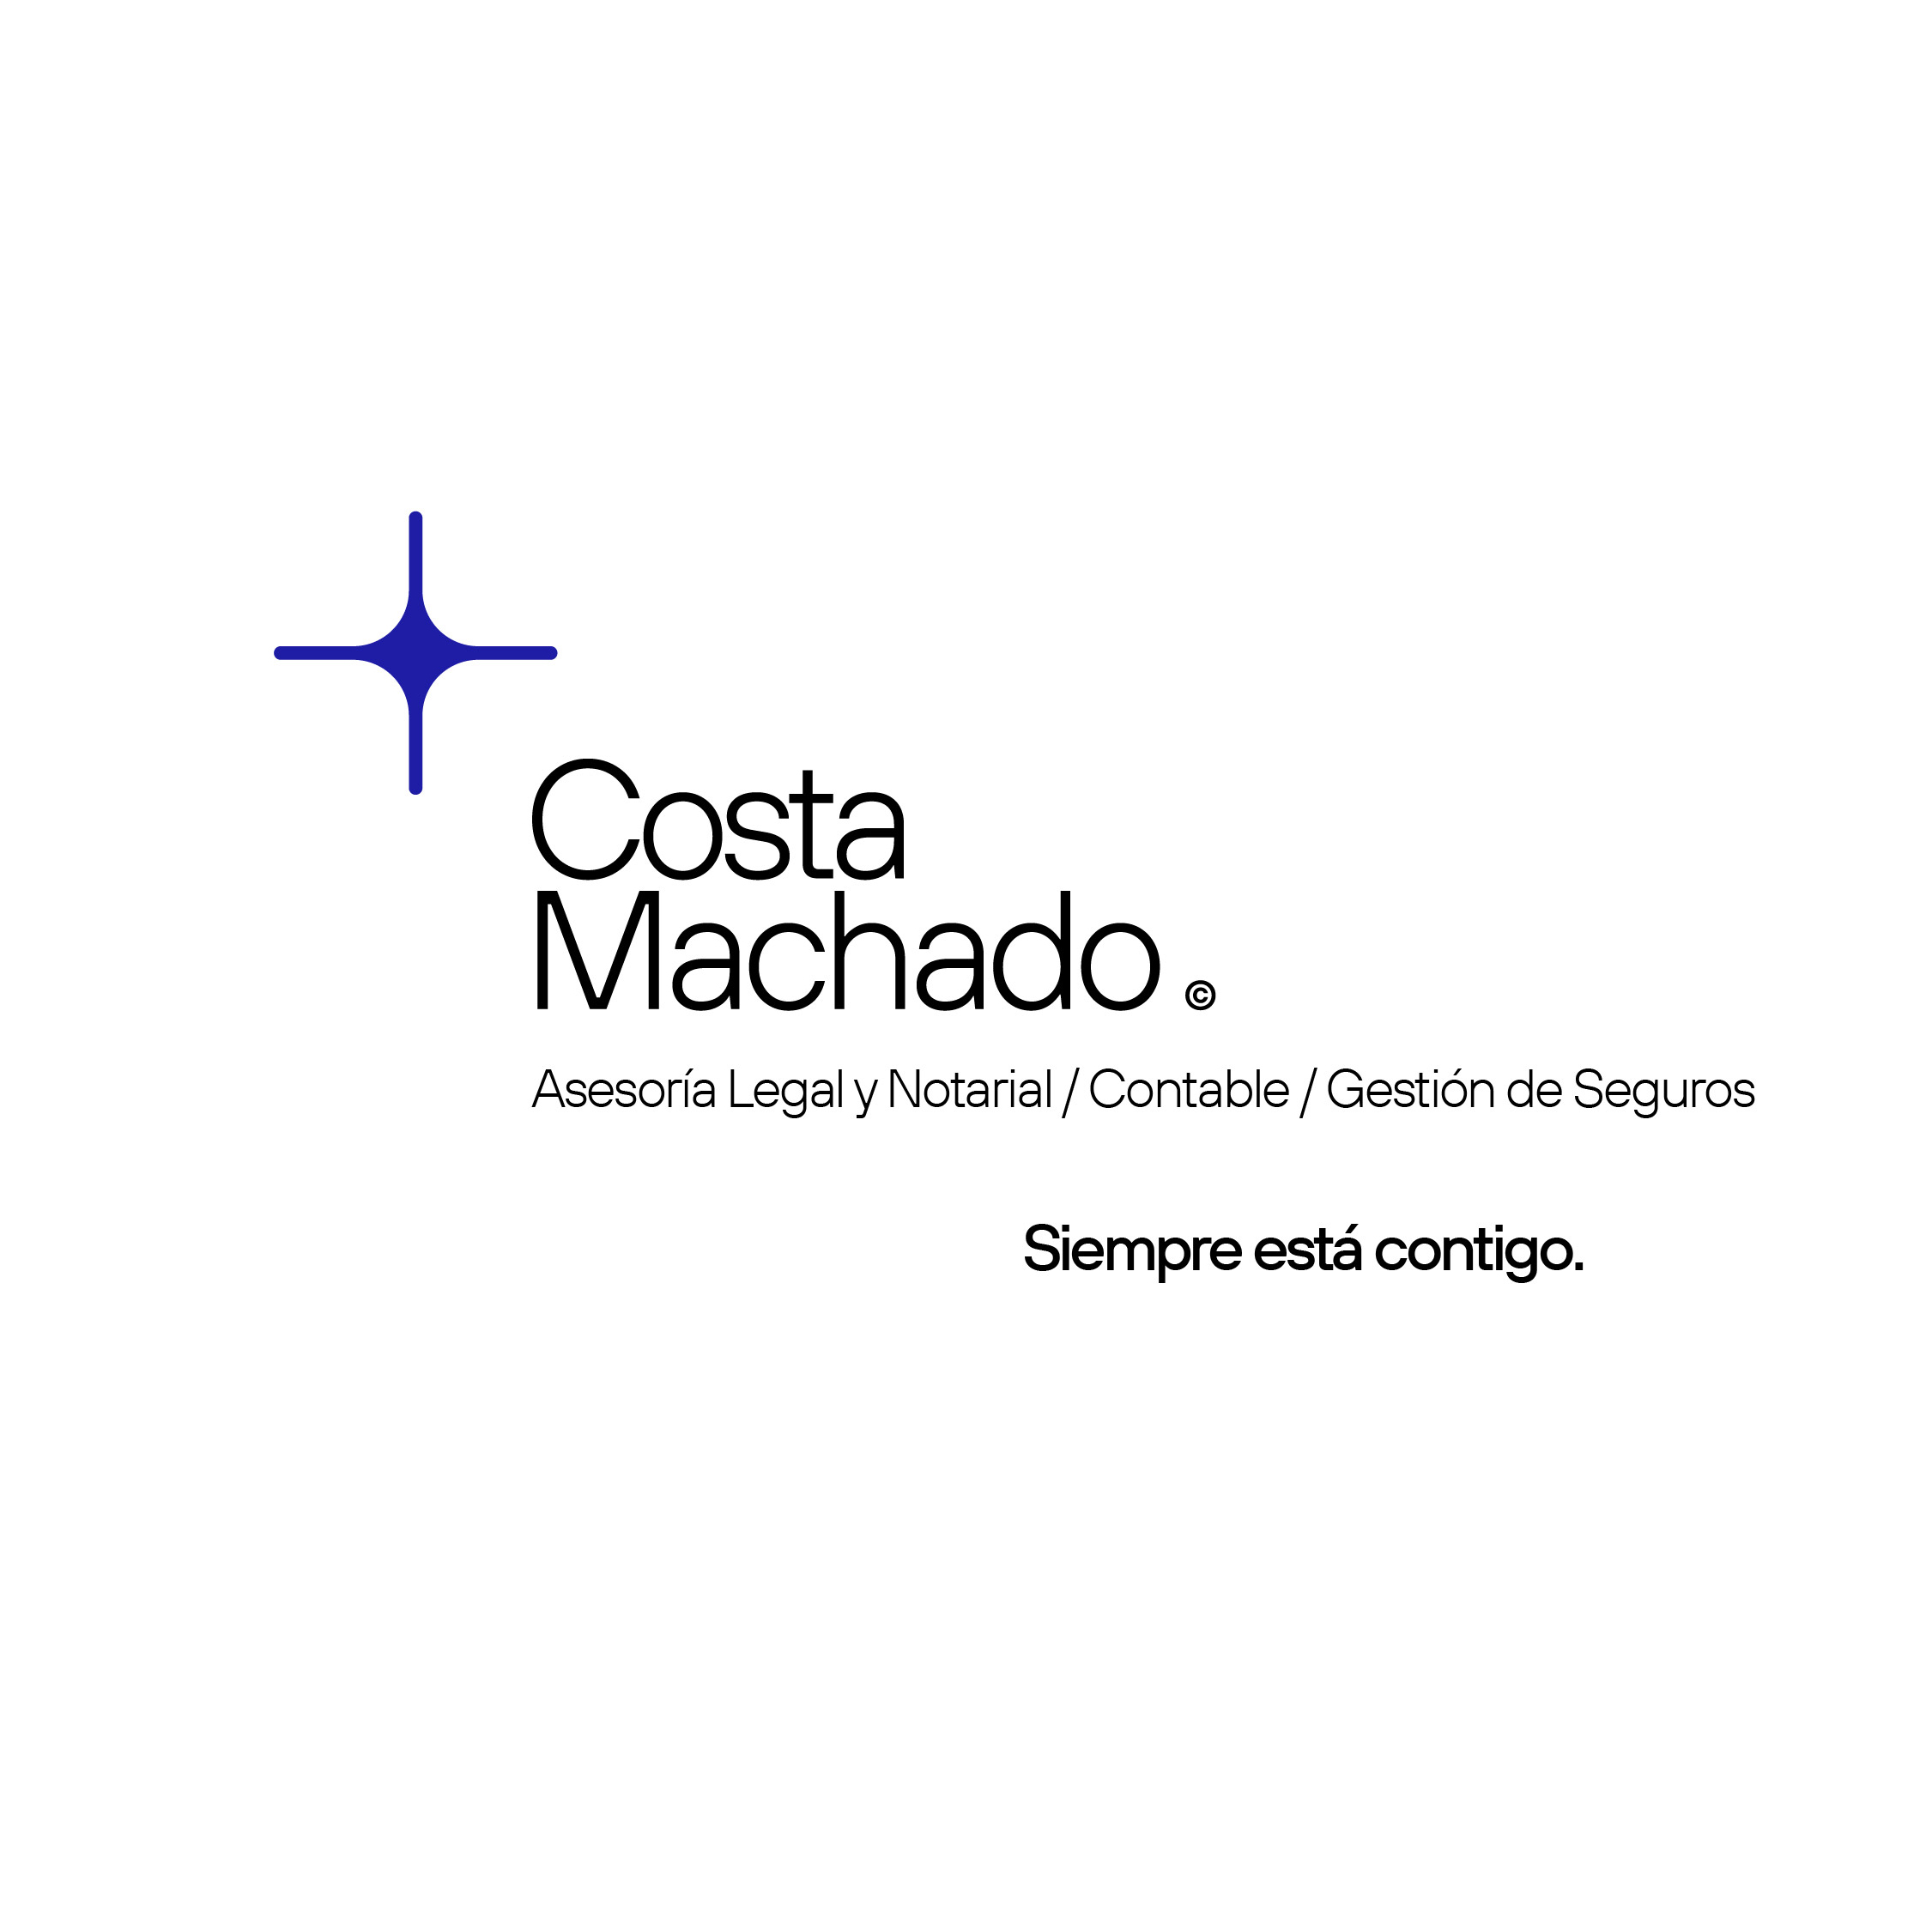 Costa Machado